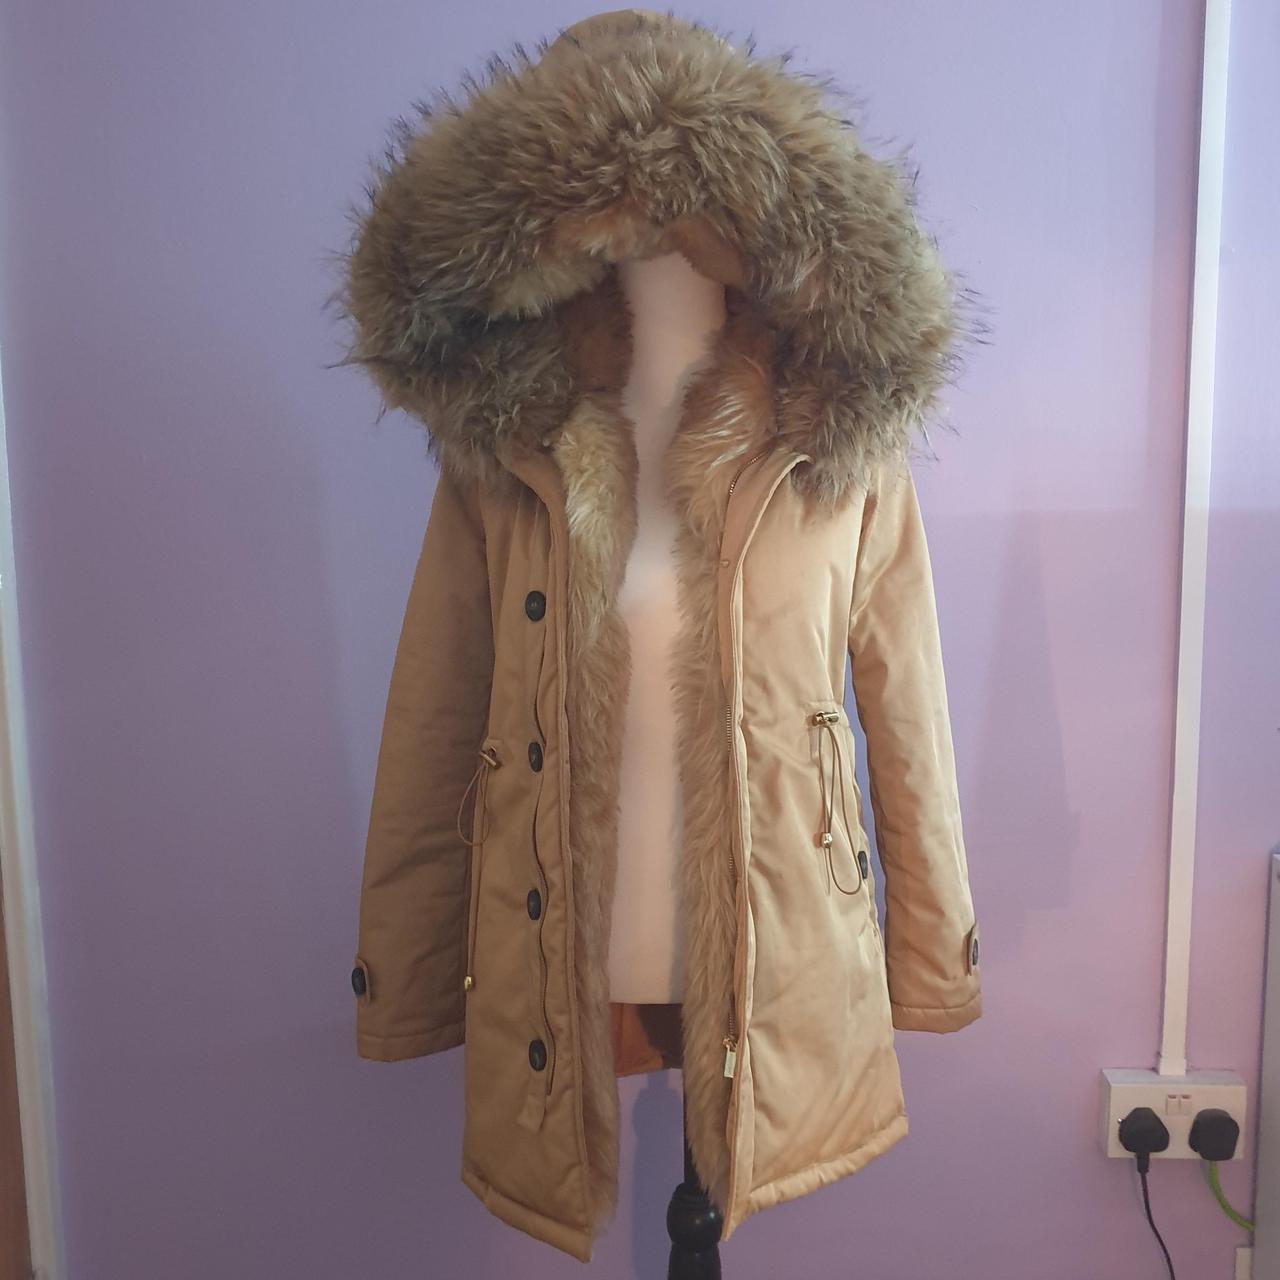 Vintage KZELL PARIS fur coat. Hardly ever worn but a... - Depop